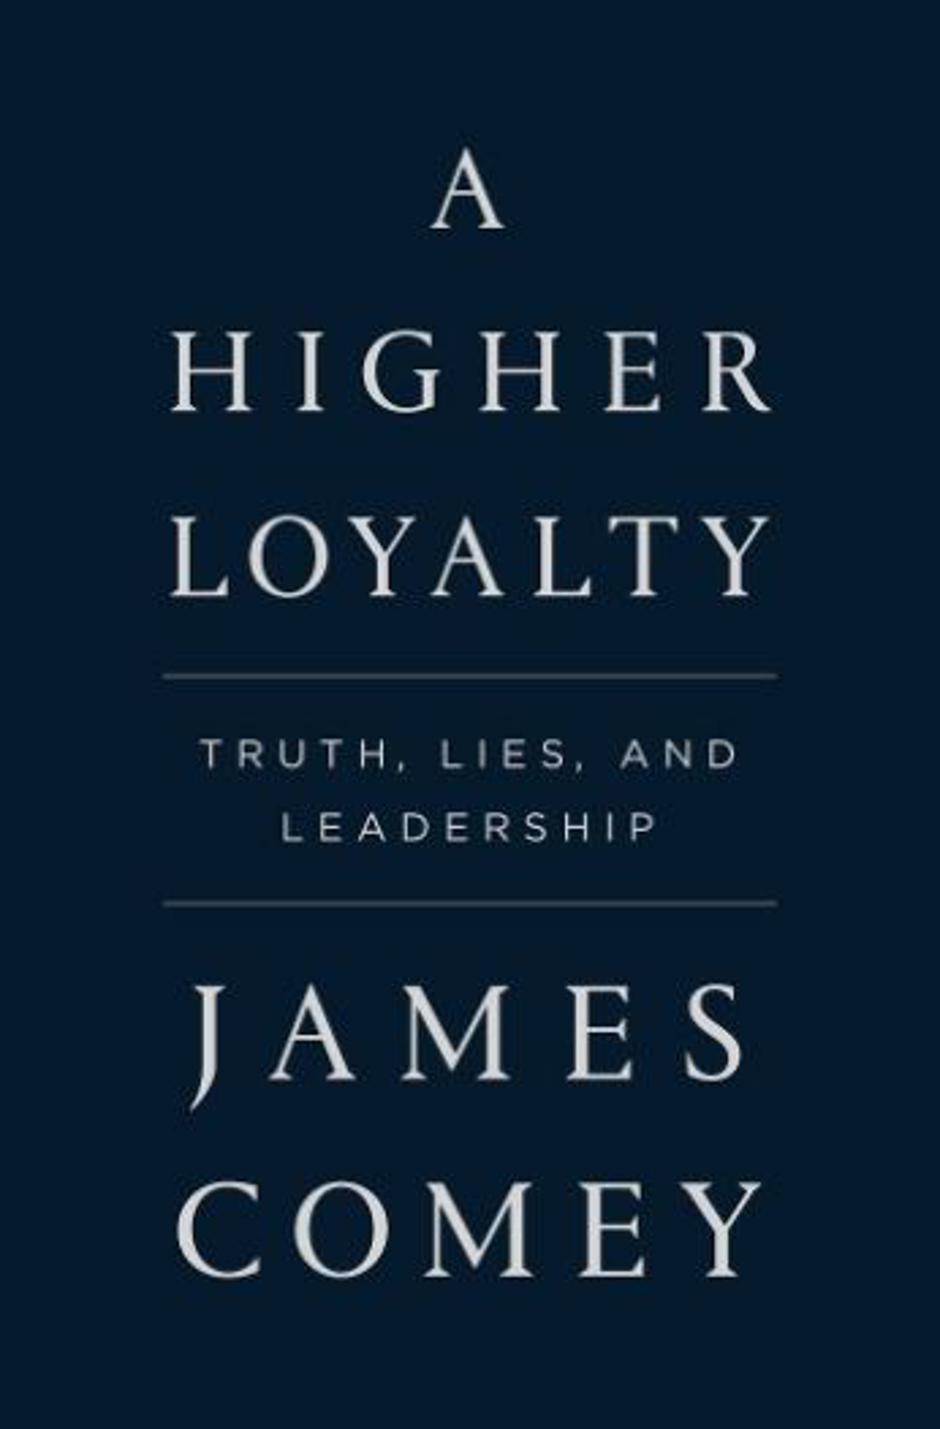 Knjiga Jamesa Comeya o Trumpu | Author: Wikipedia